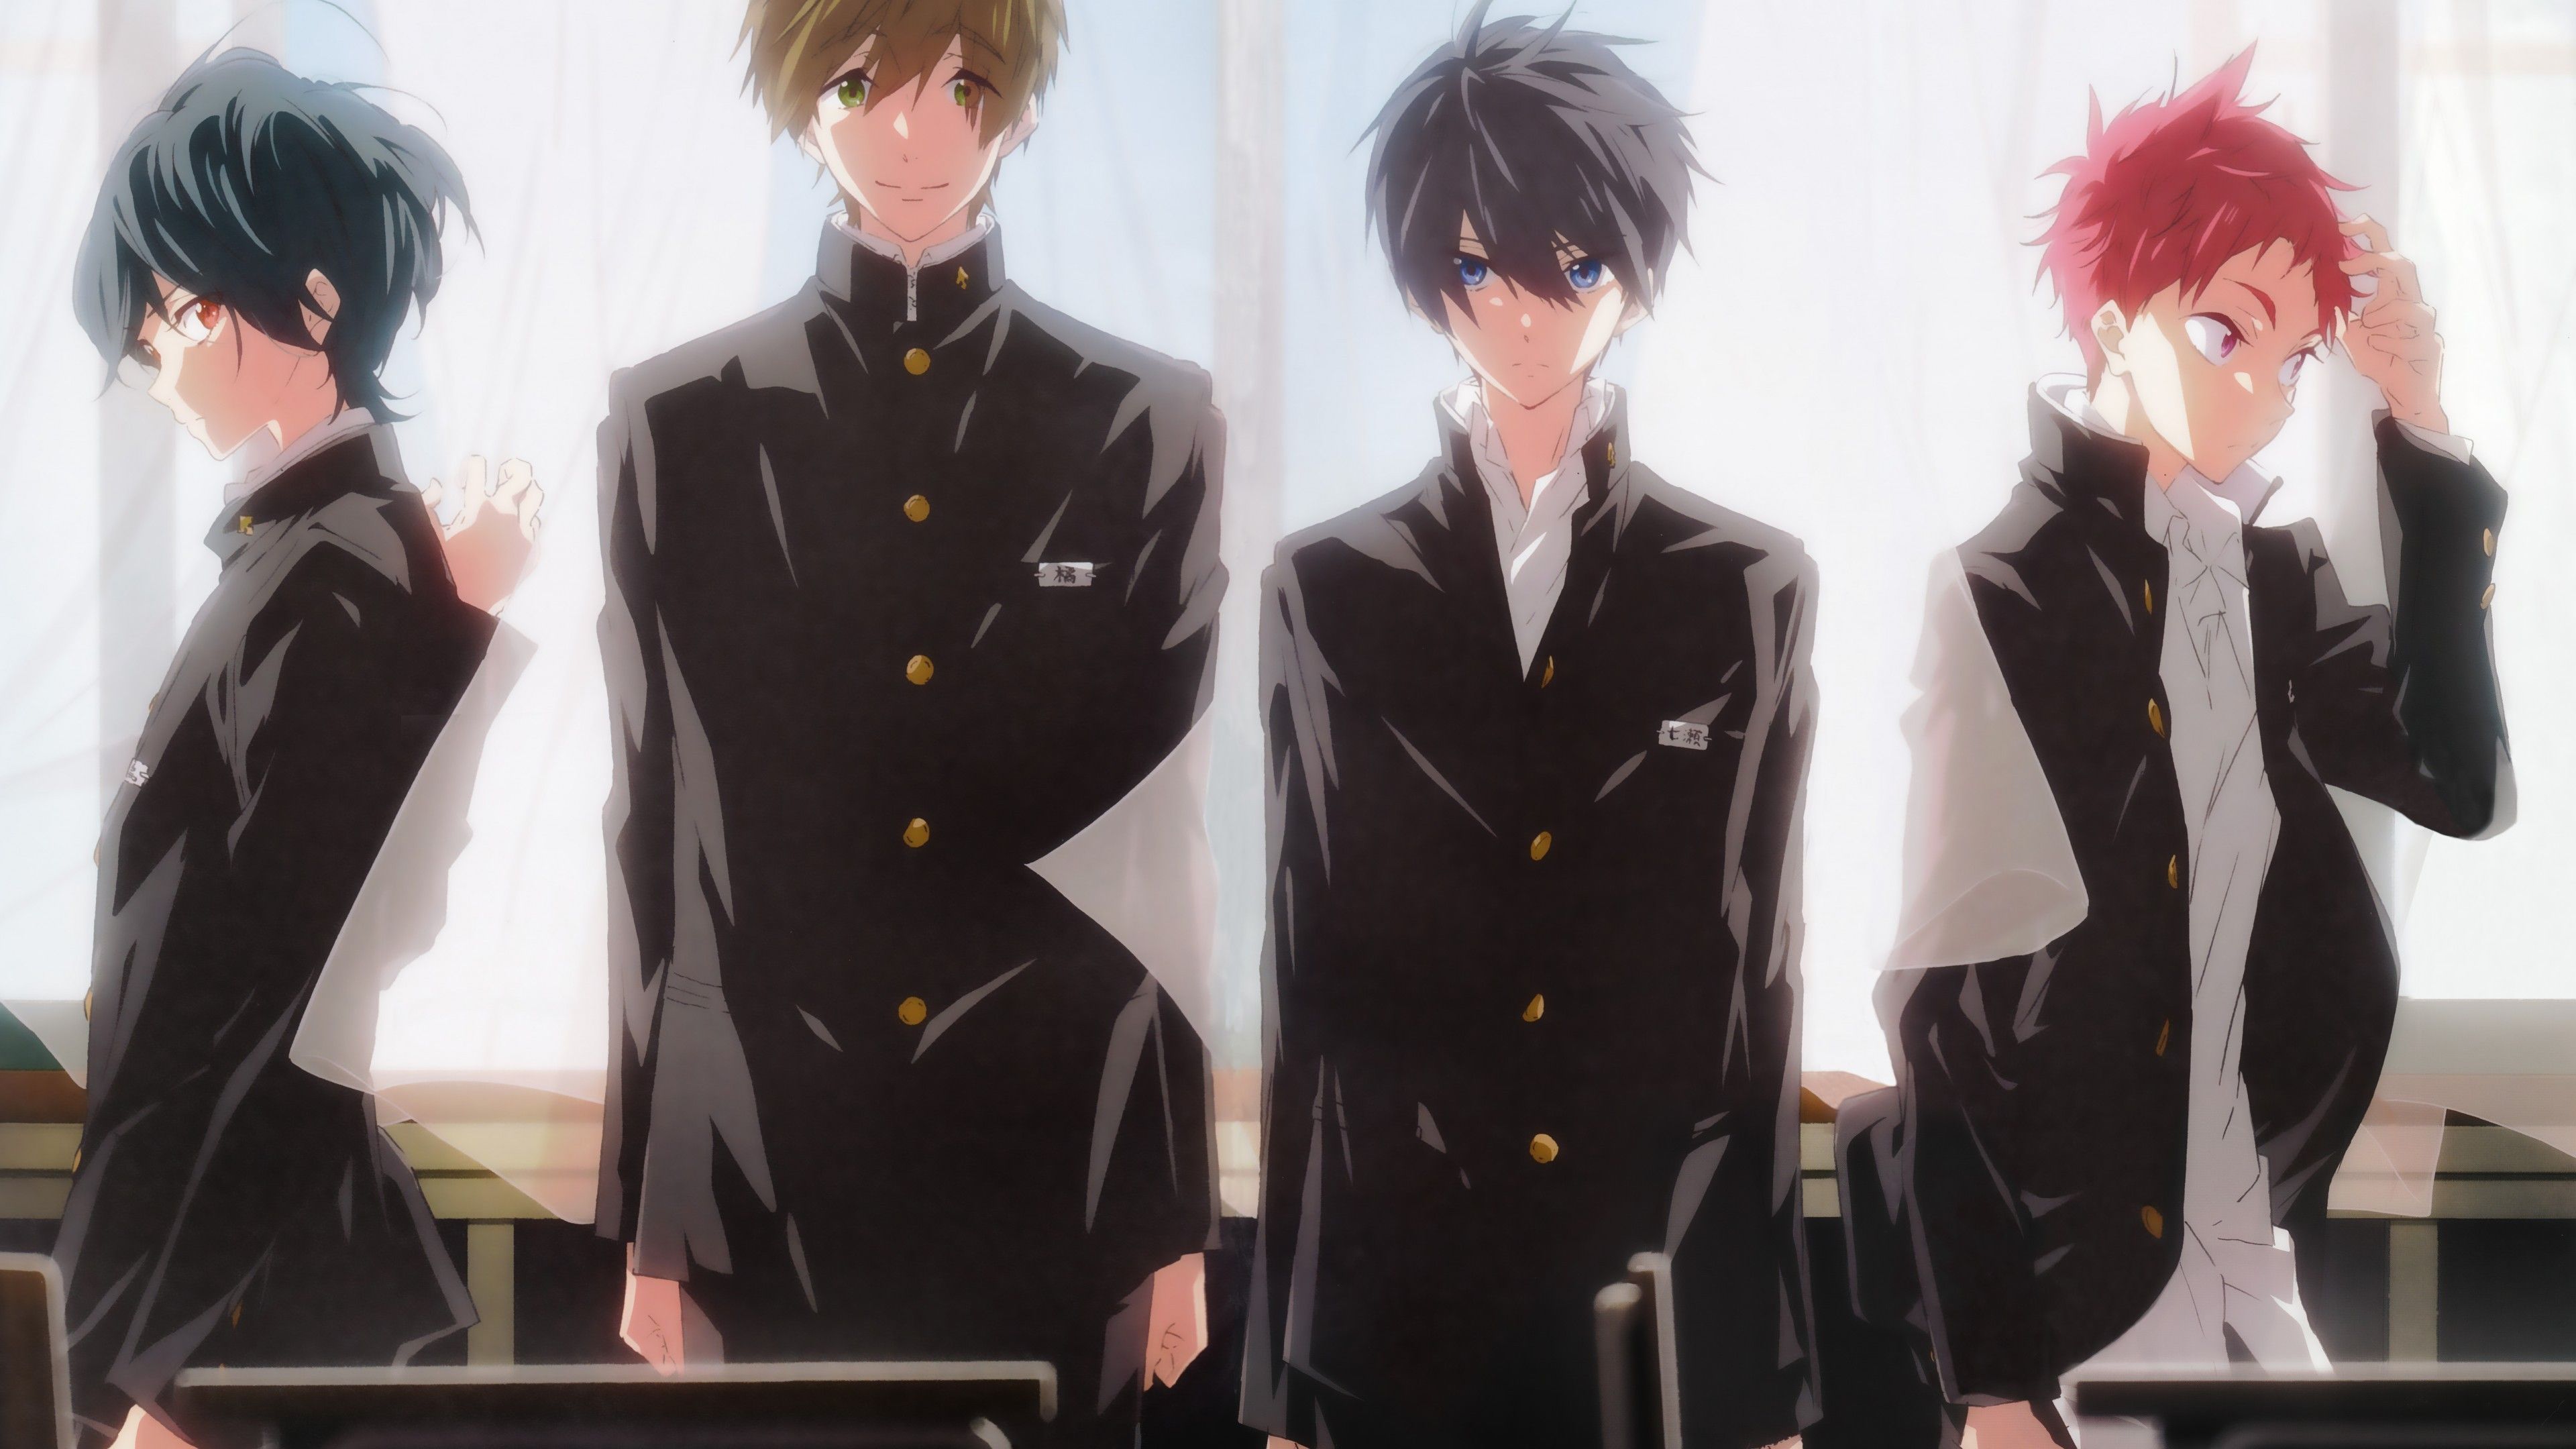 Download 3840x2160 Anime Guys, Boy School Uniform, Wallpaper for UHD TV